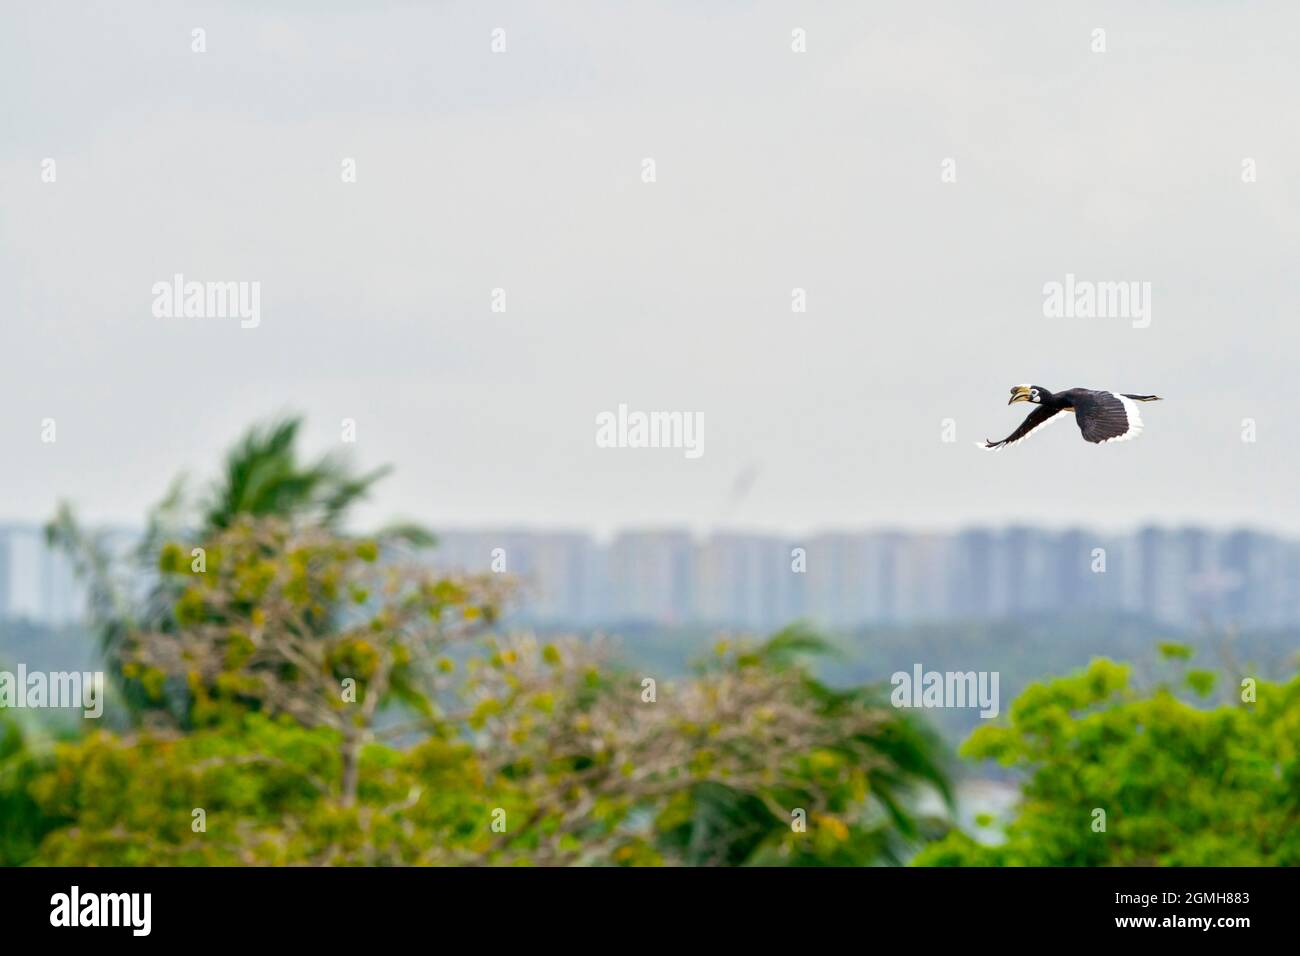 A female Oriental Pied Hornbill flies across an urban landscape, Singapore Stock Photo